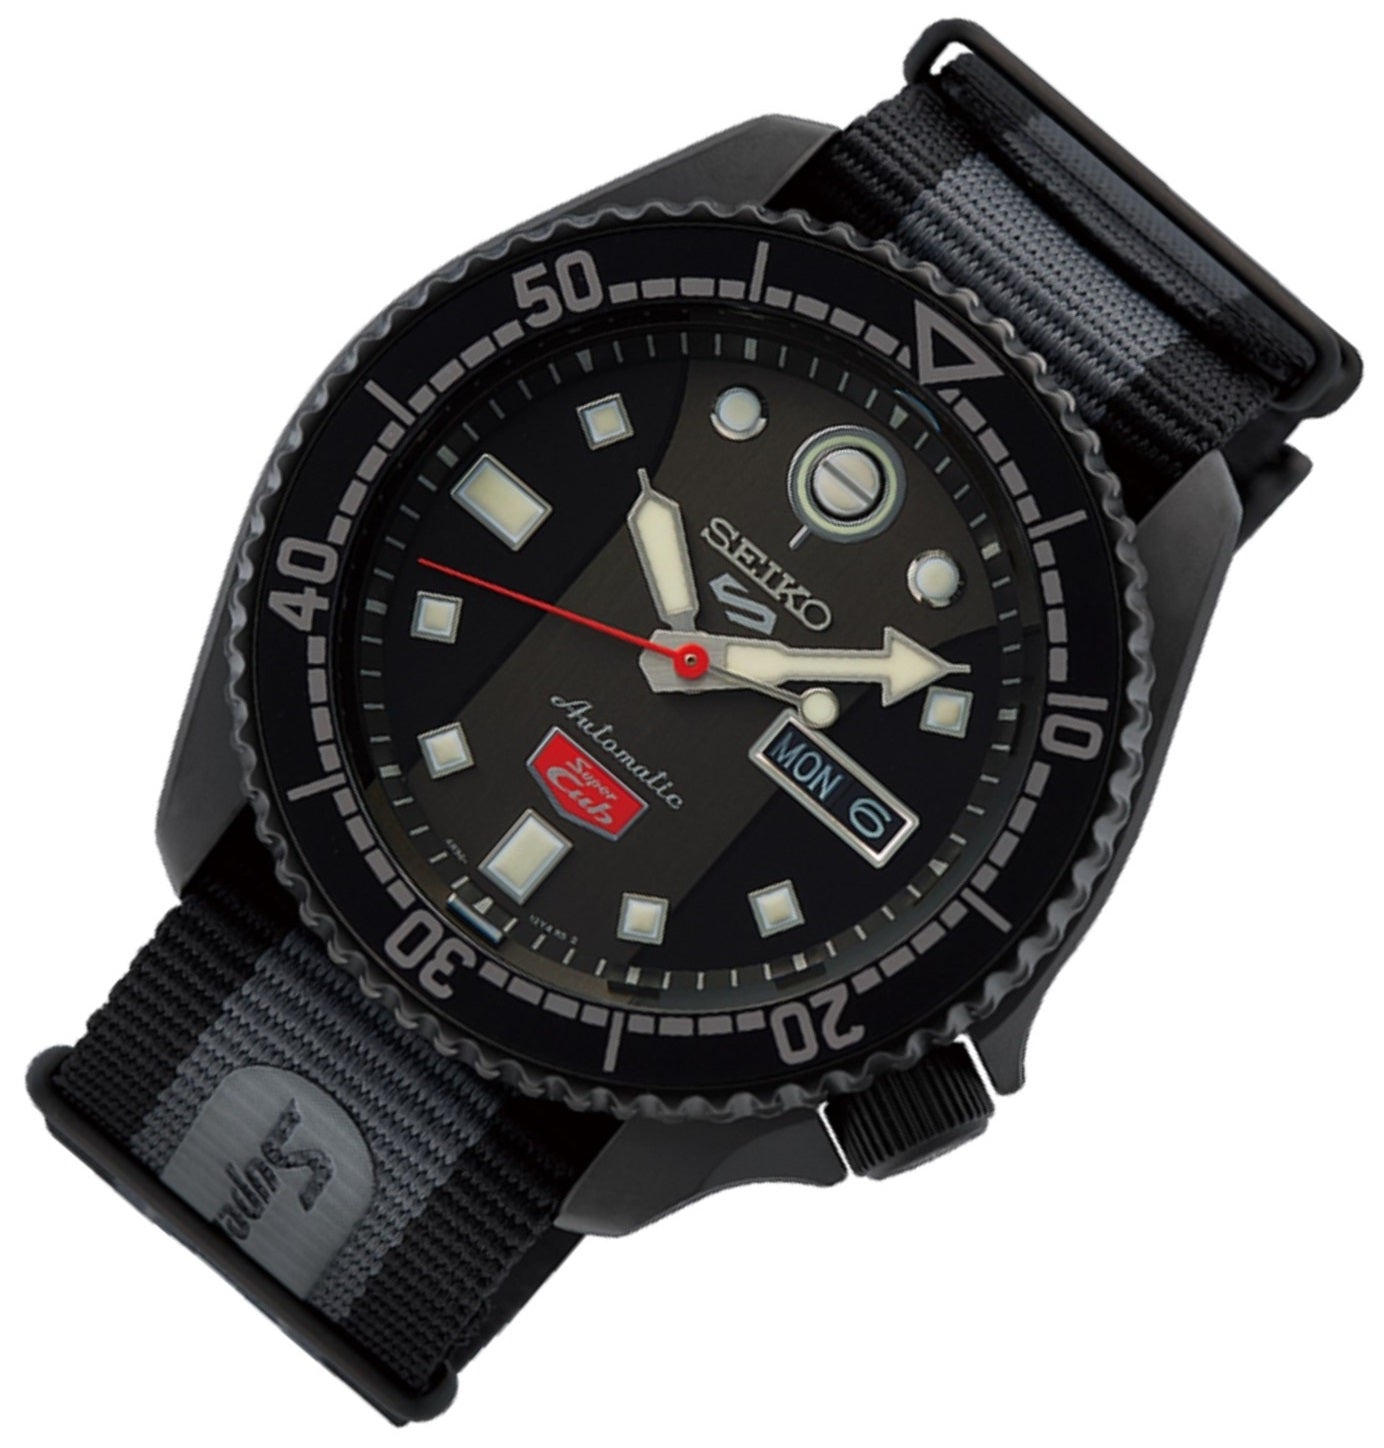 Seiko 5 SRPJ75K1 Sports Honda Super Cub Limited Edition Automatic Watch-Watch Portal Philippines